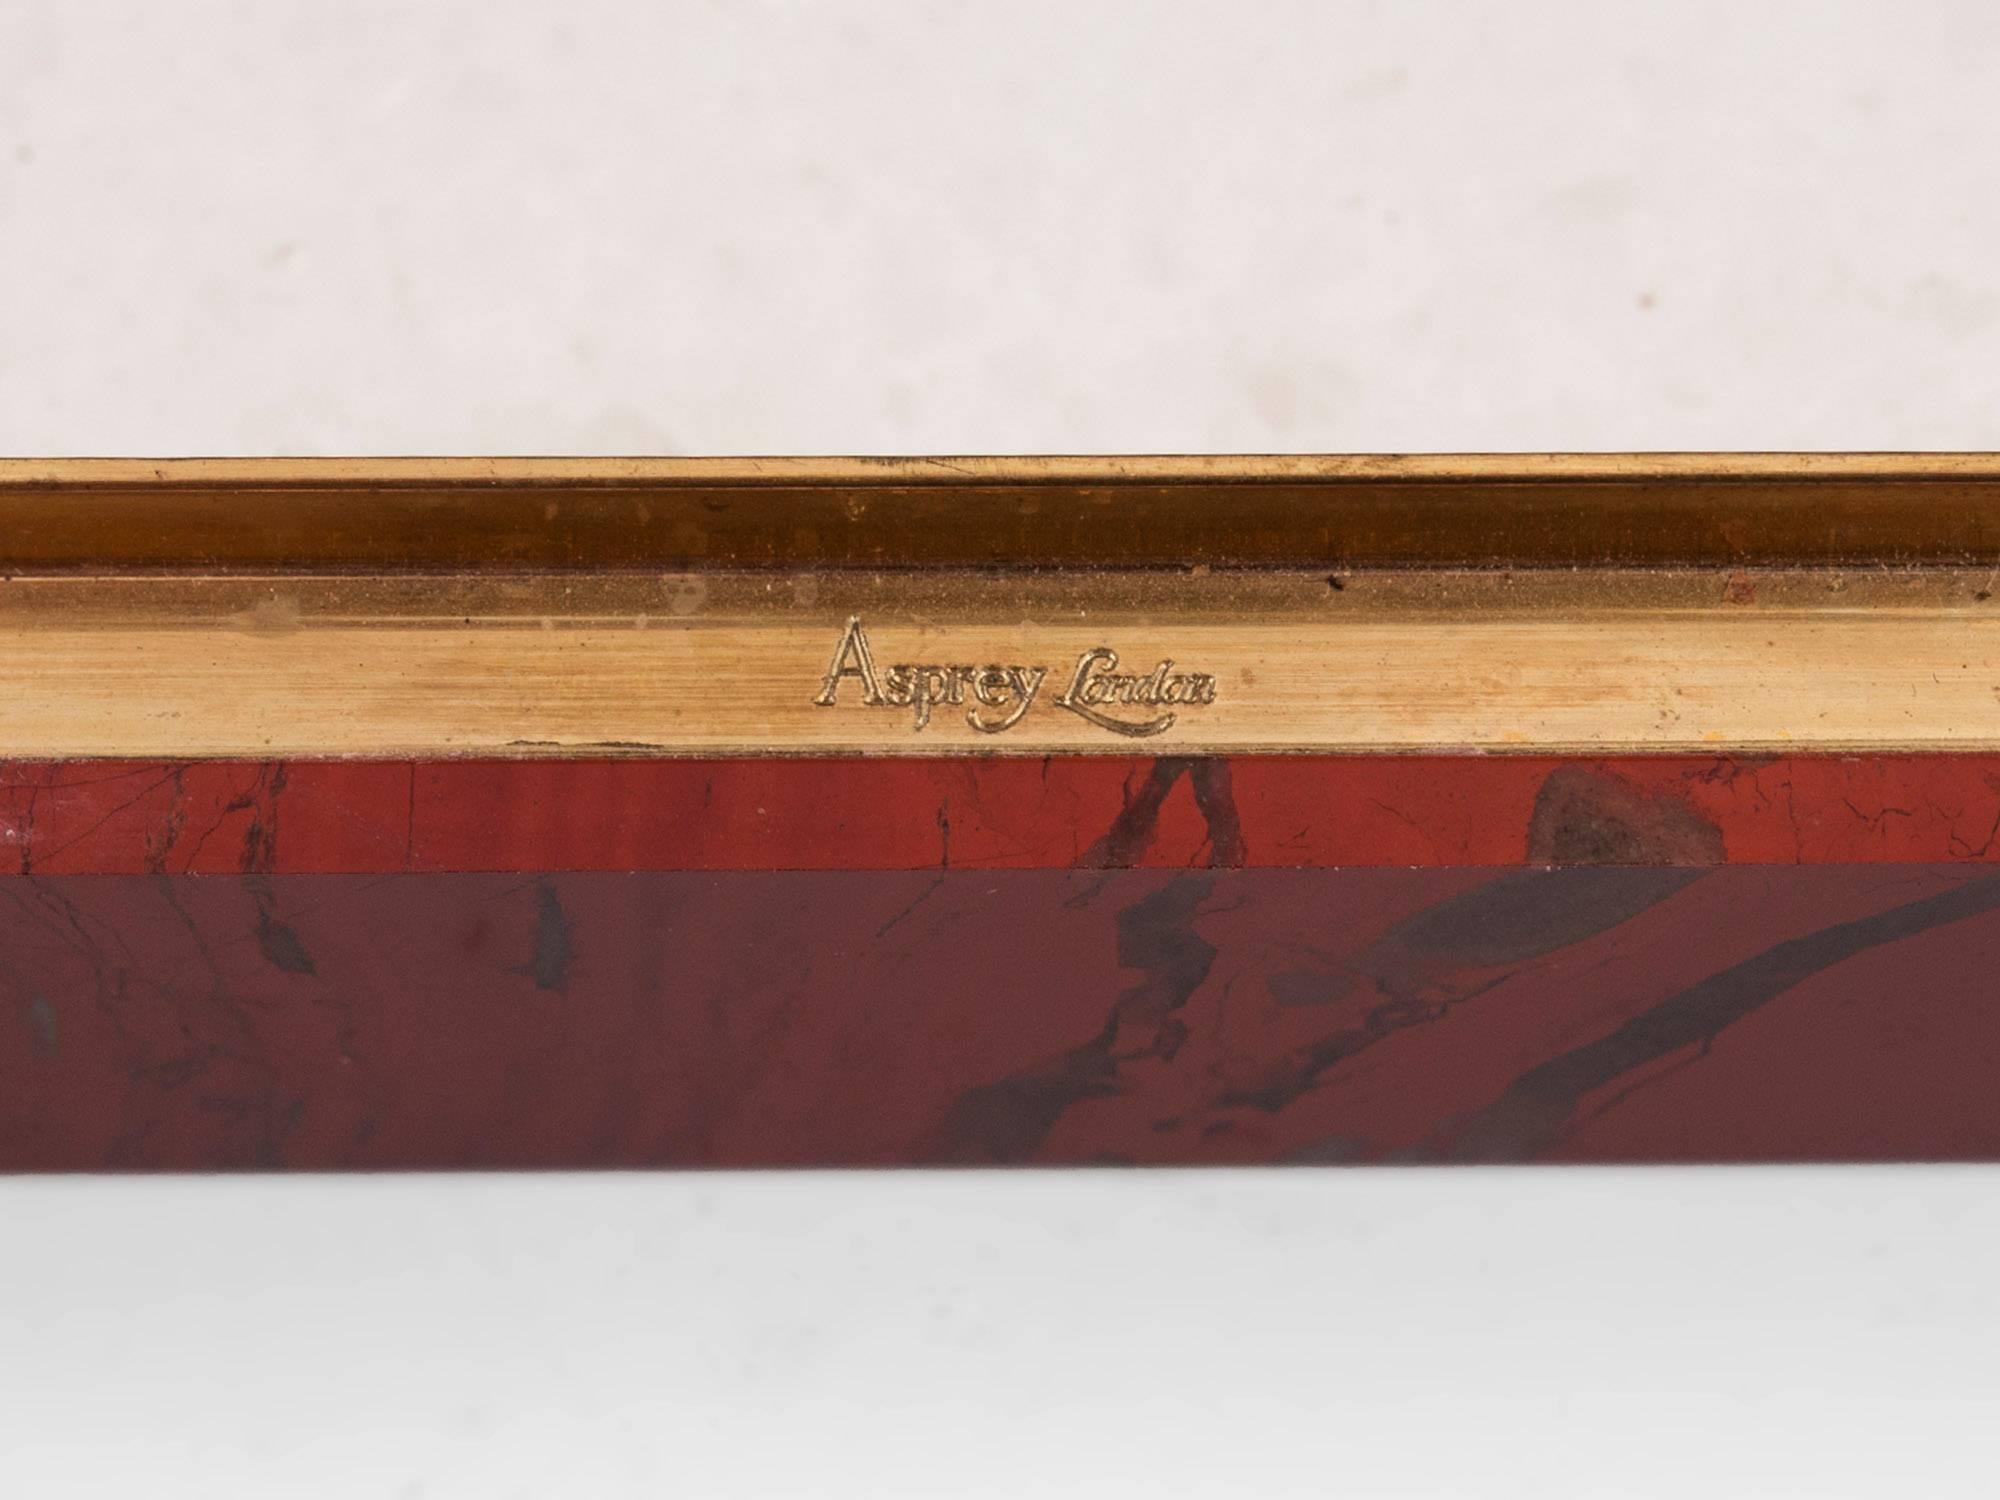 Asprey & Co Vintage Jasper four-piece Desk Set Photo Frame Lighter Ashtray Box 4